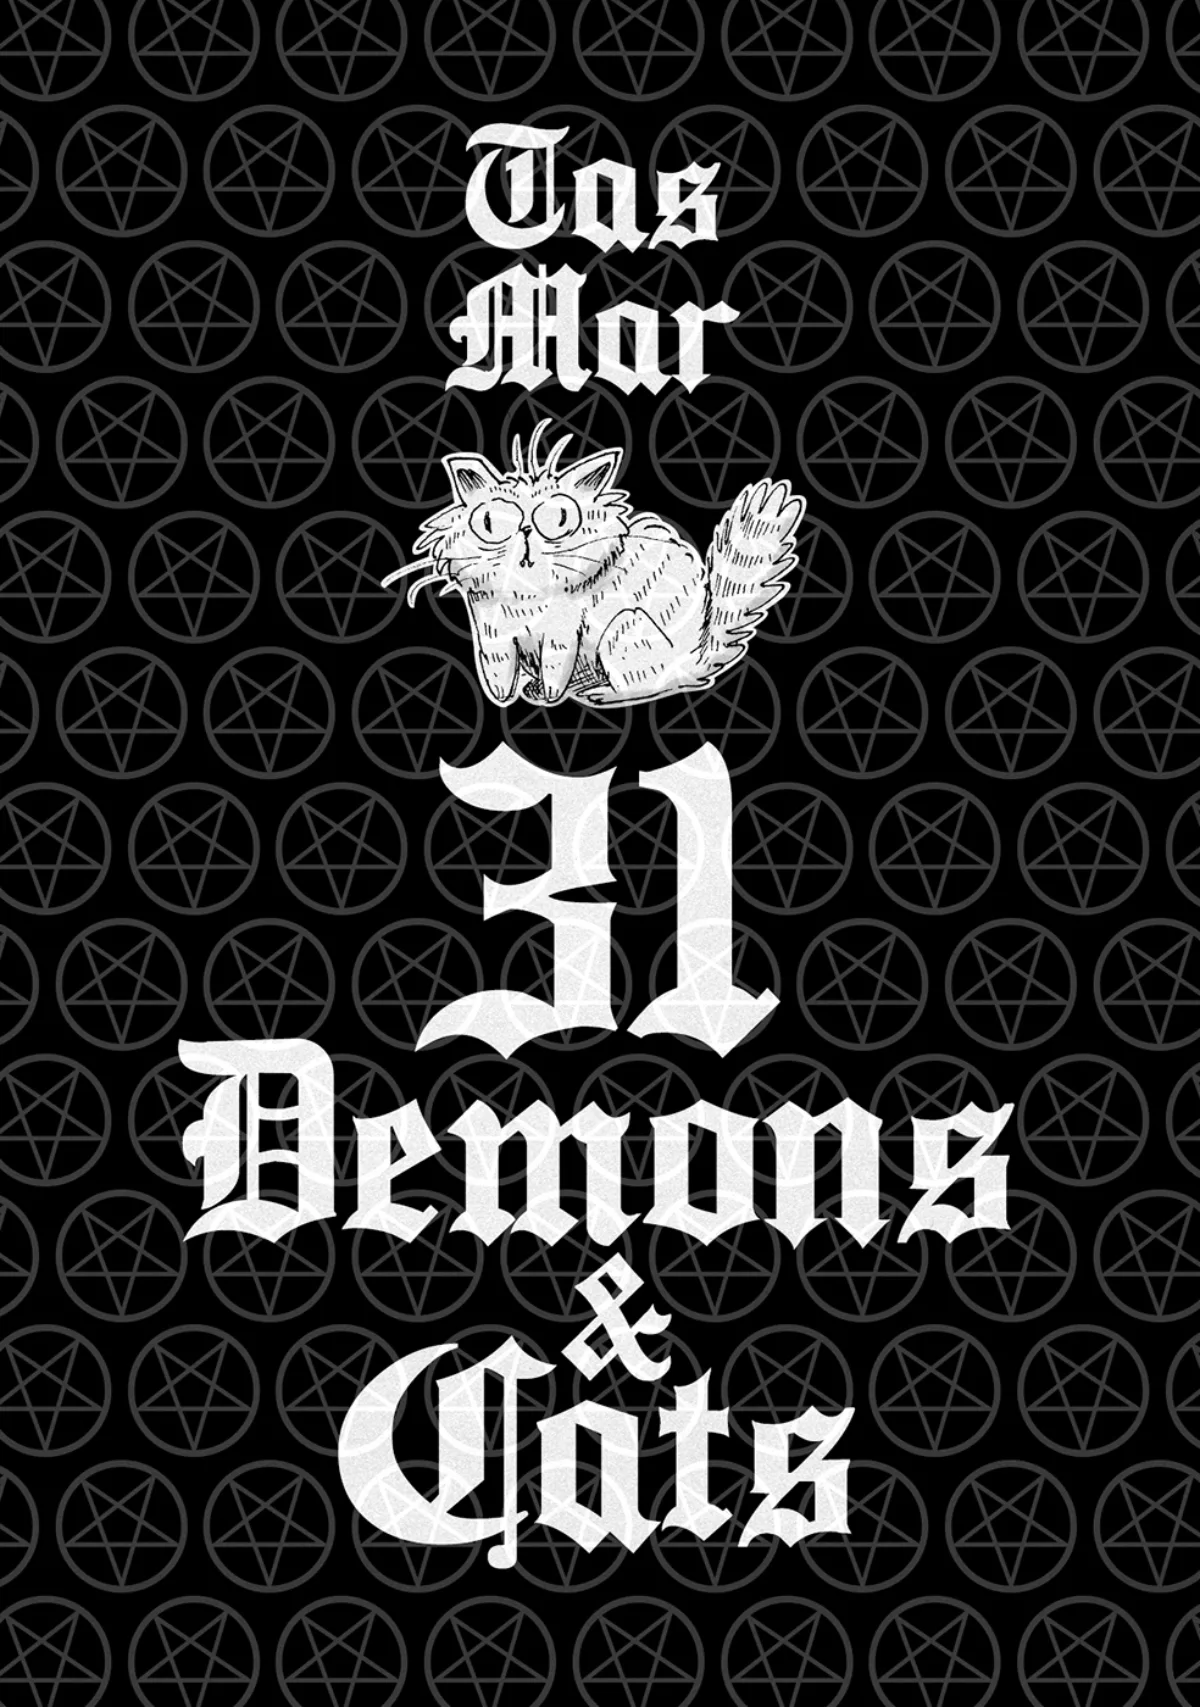 31 Demons & Cats